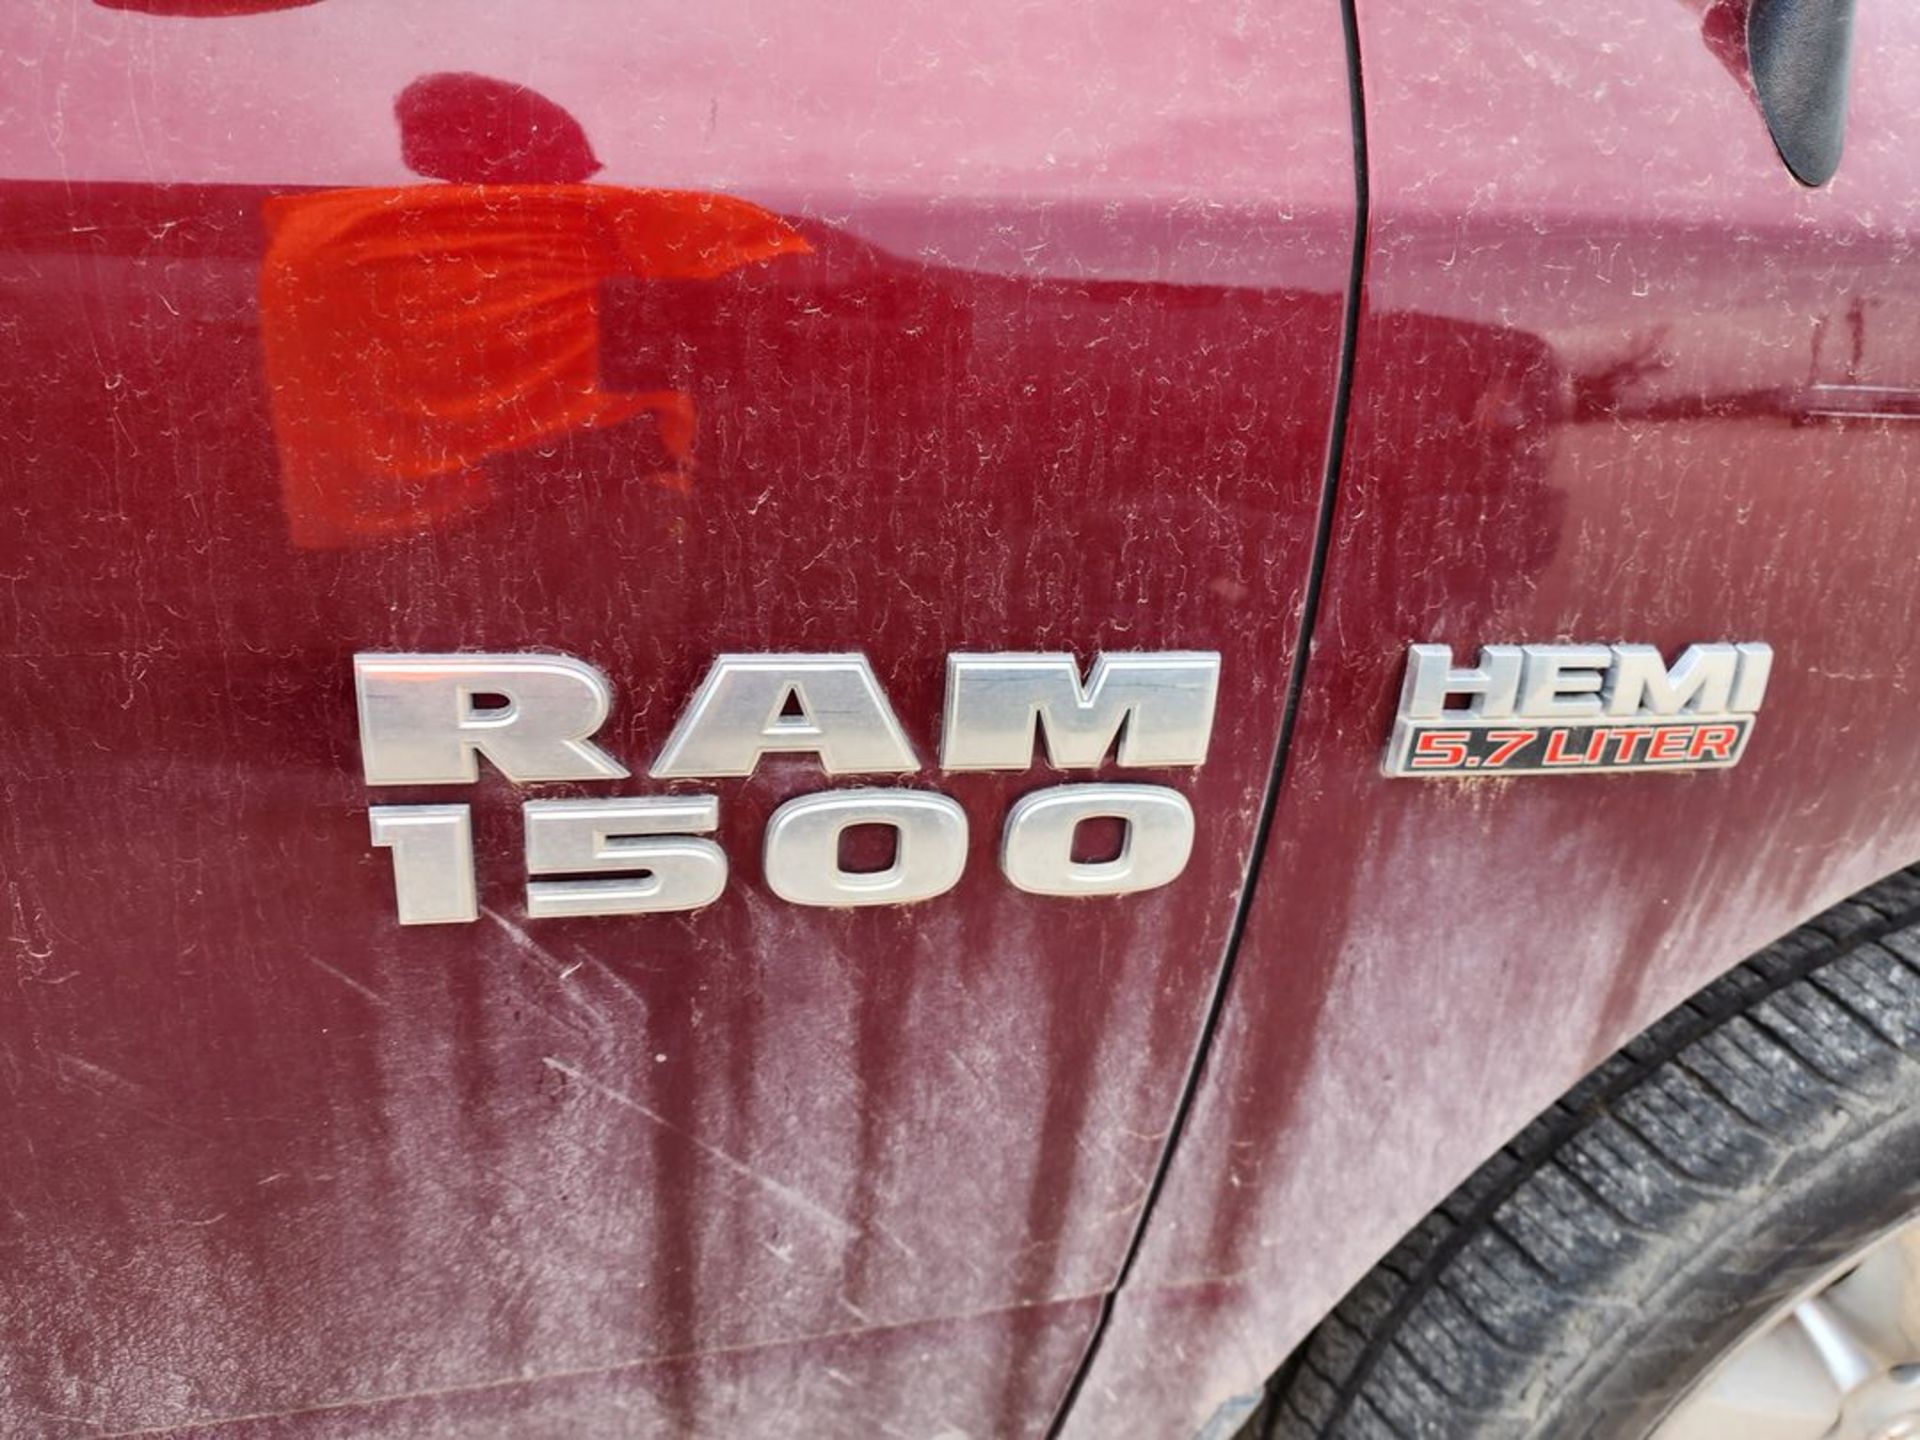 2017 Dodge Ram 1500 Hemi Truck (Gasoline) Mileage: 91,258 ; Vin: 1C6RR7LT6HS823356; TX Plate: JXZ- - Image 5 of 18